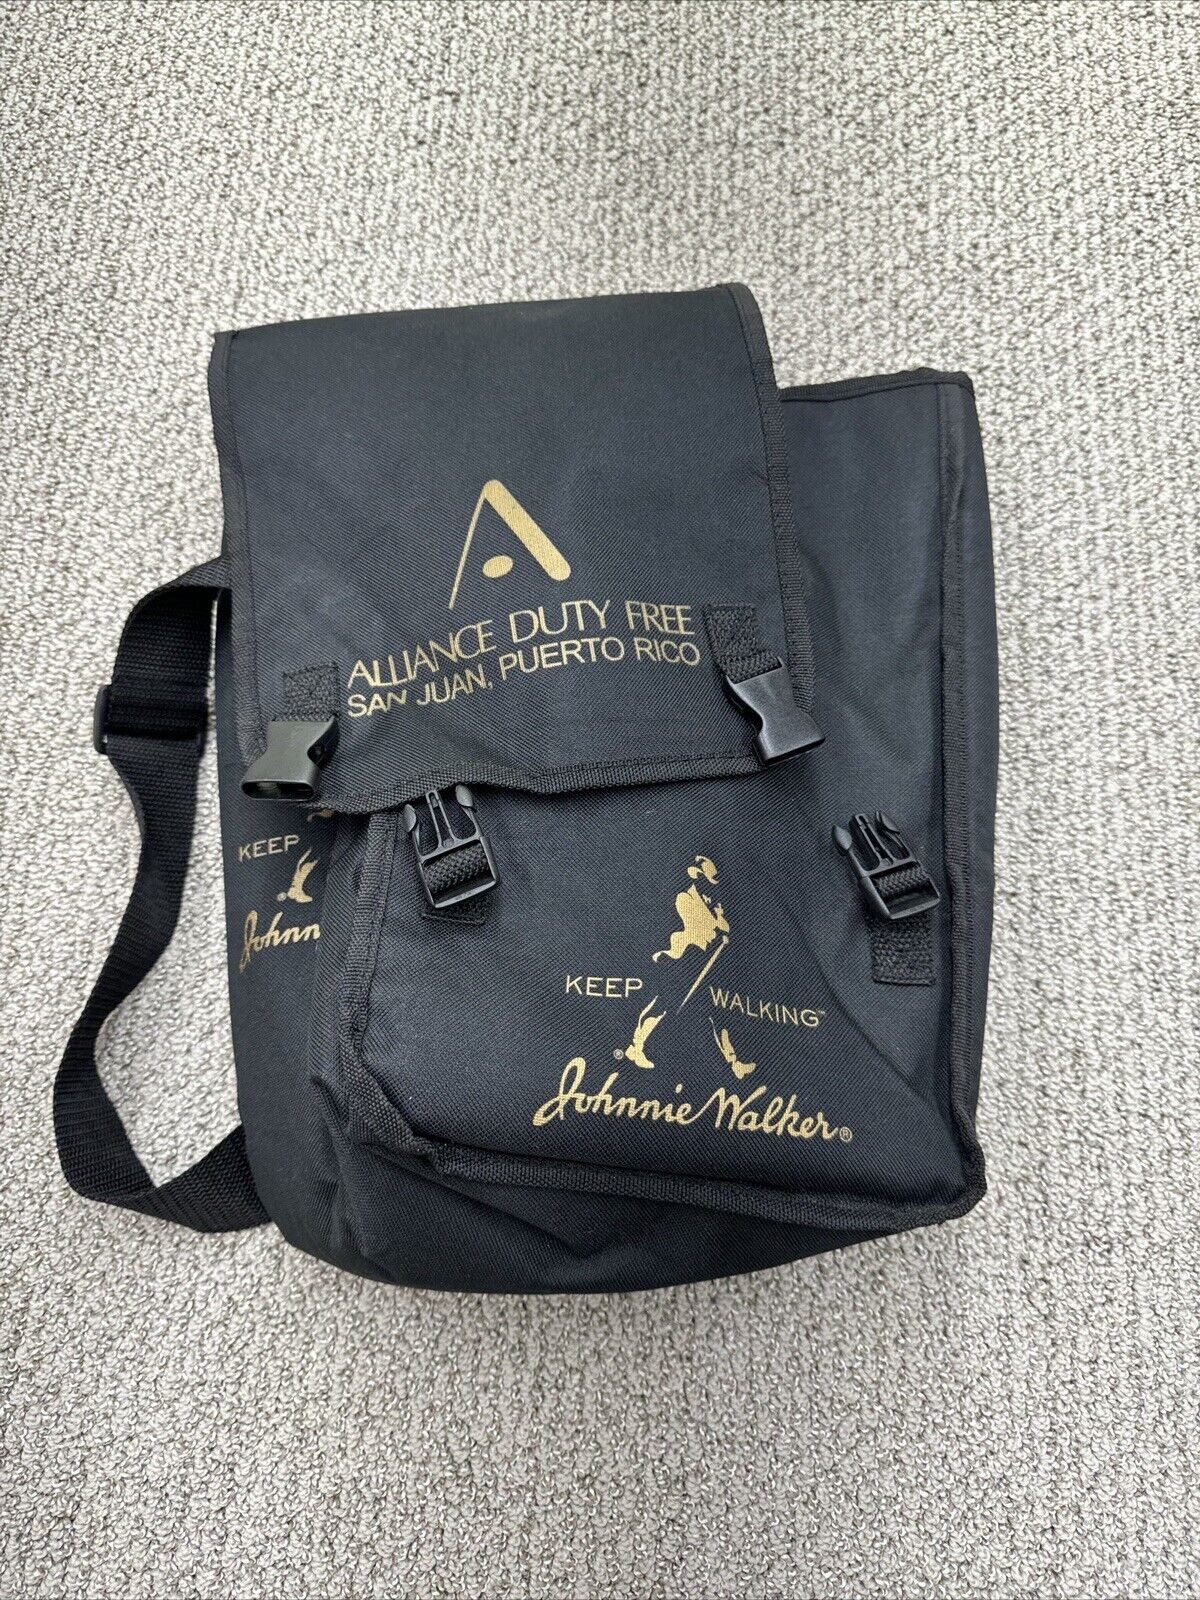 Johnnie Walker Alliance Duty Free San Juan, Puerto Rico shoulder hiking bag